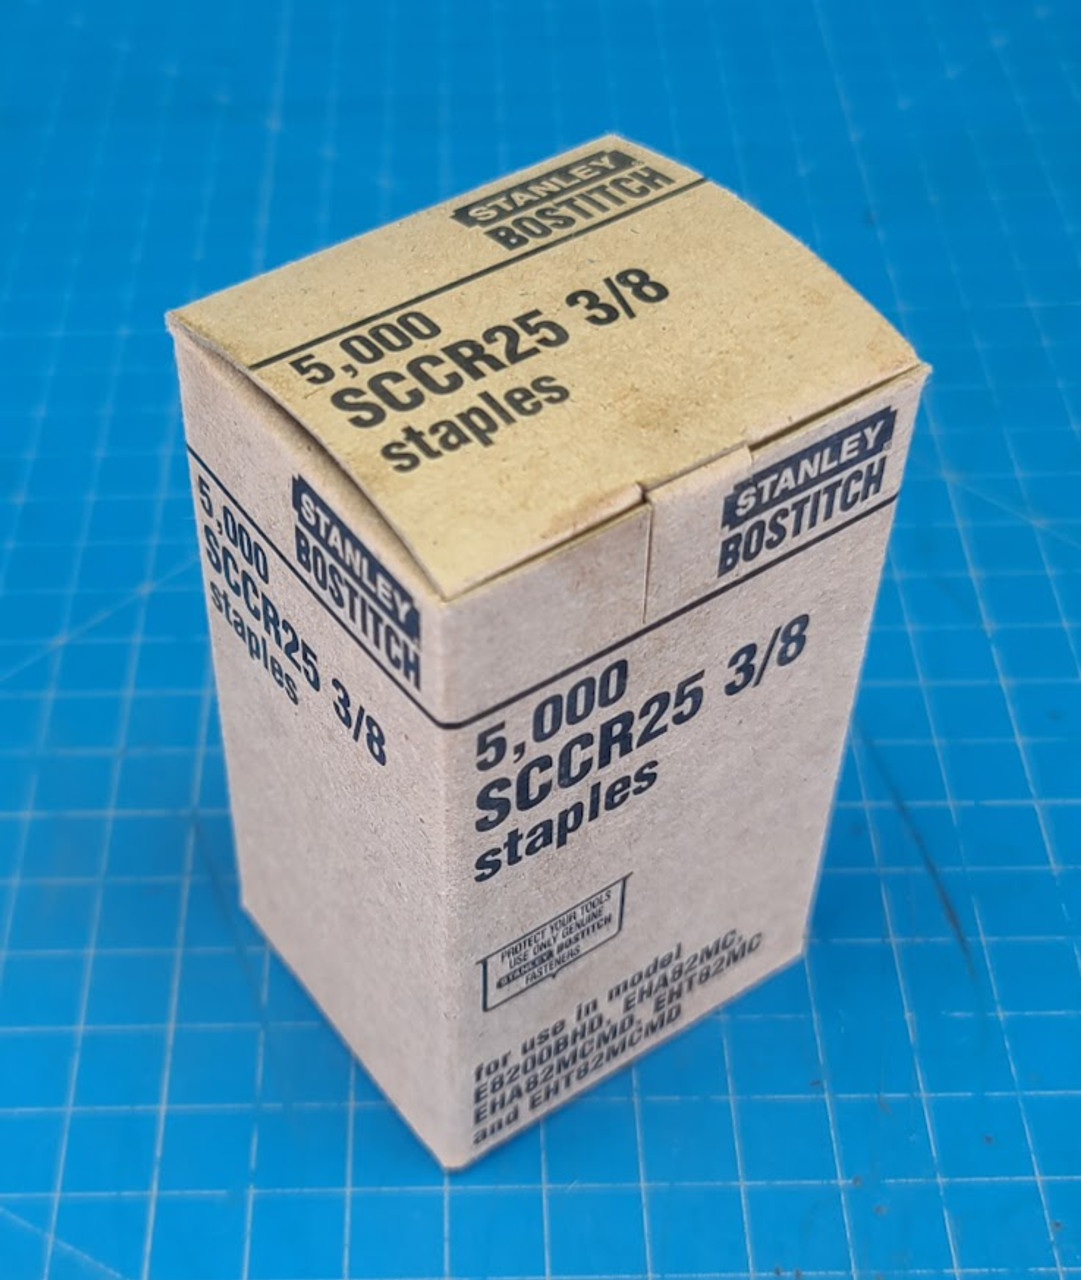 Bostitch SCCR 25-3/8" Staples Box of 5000